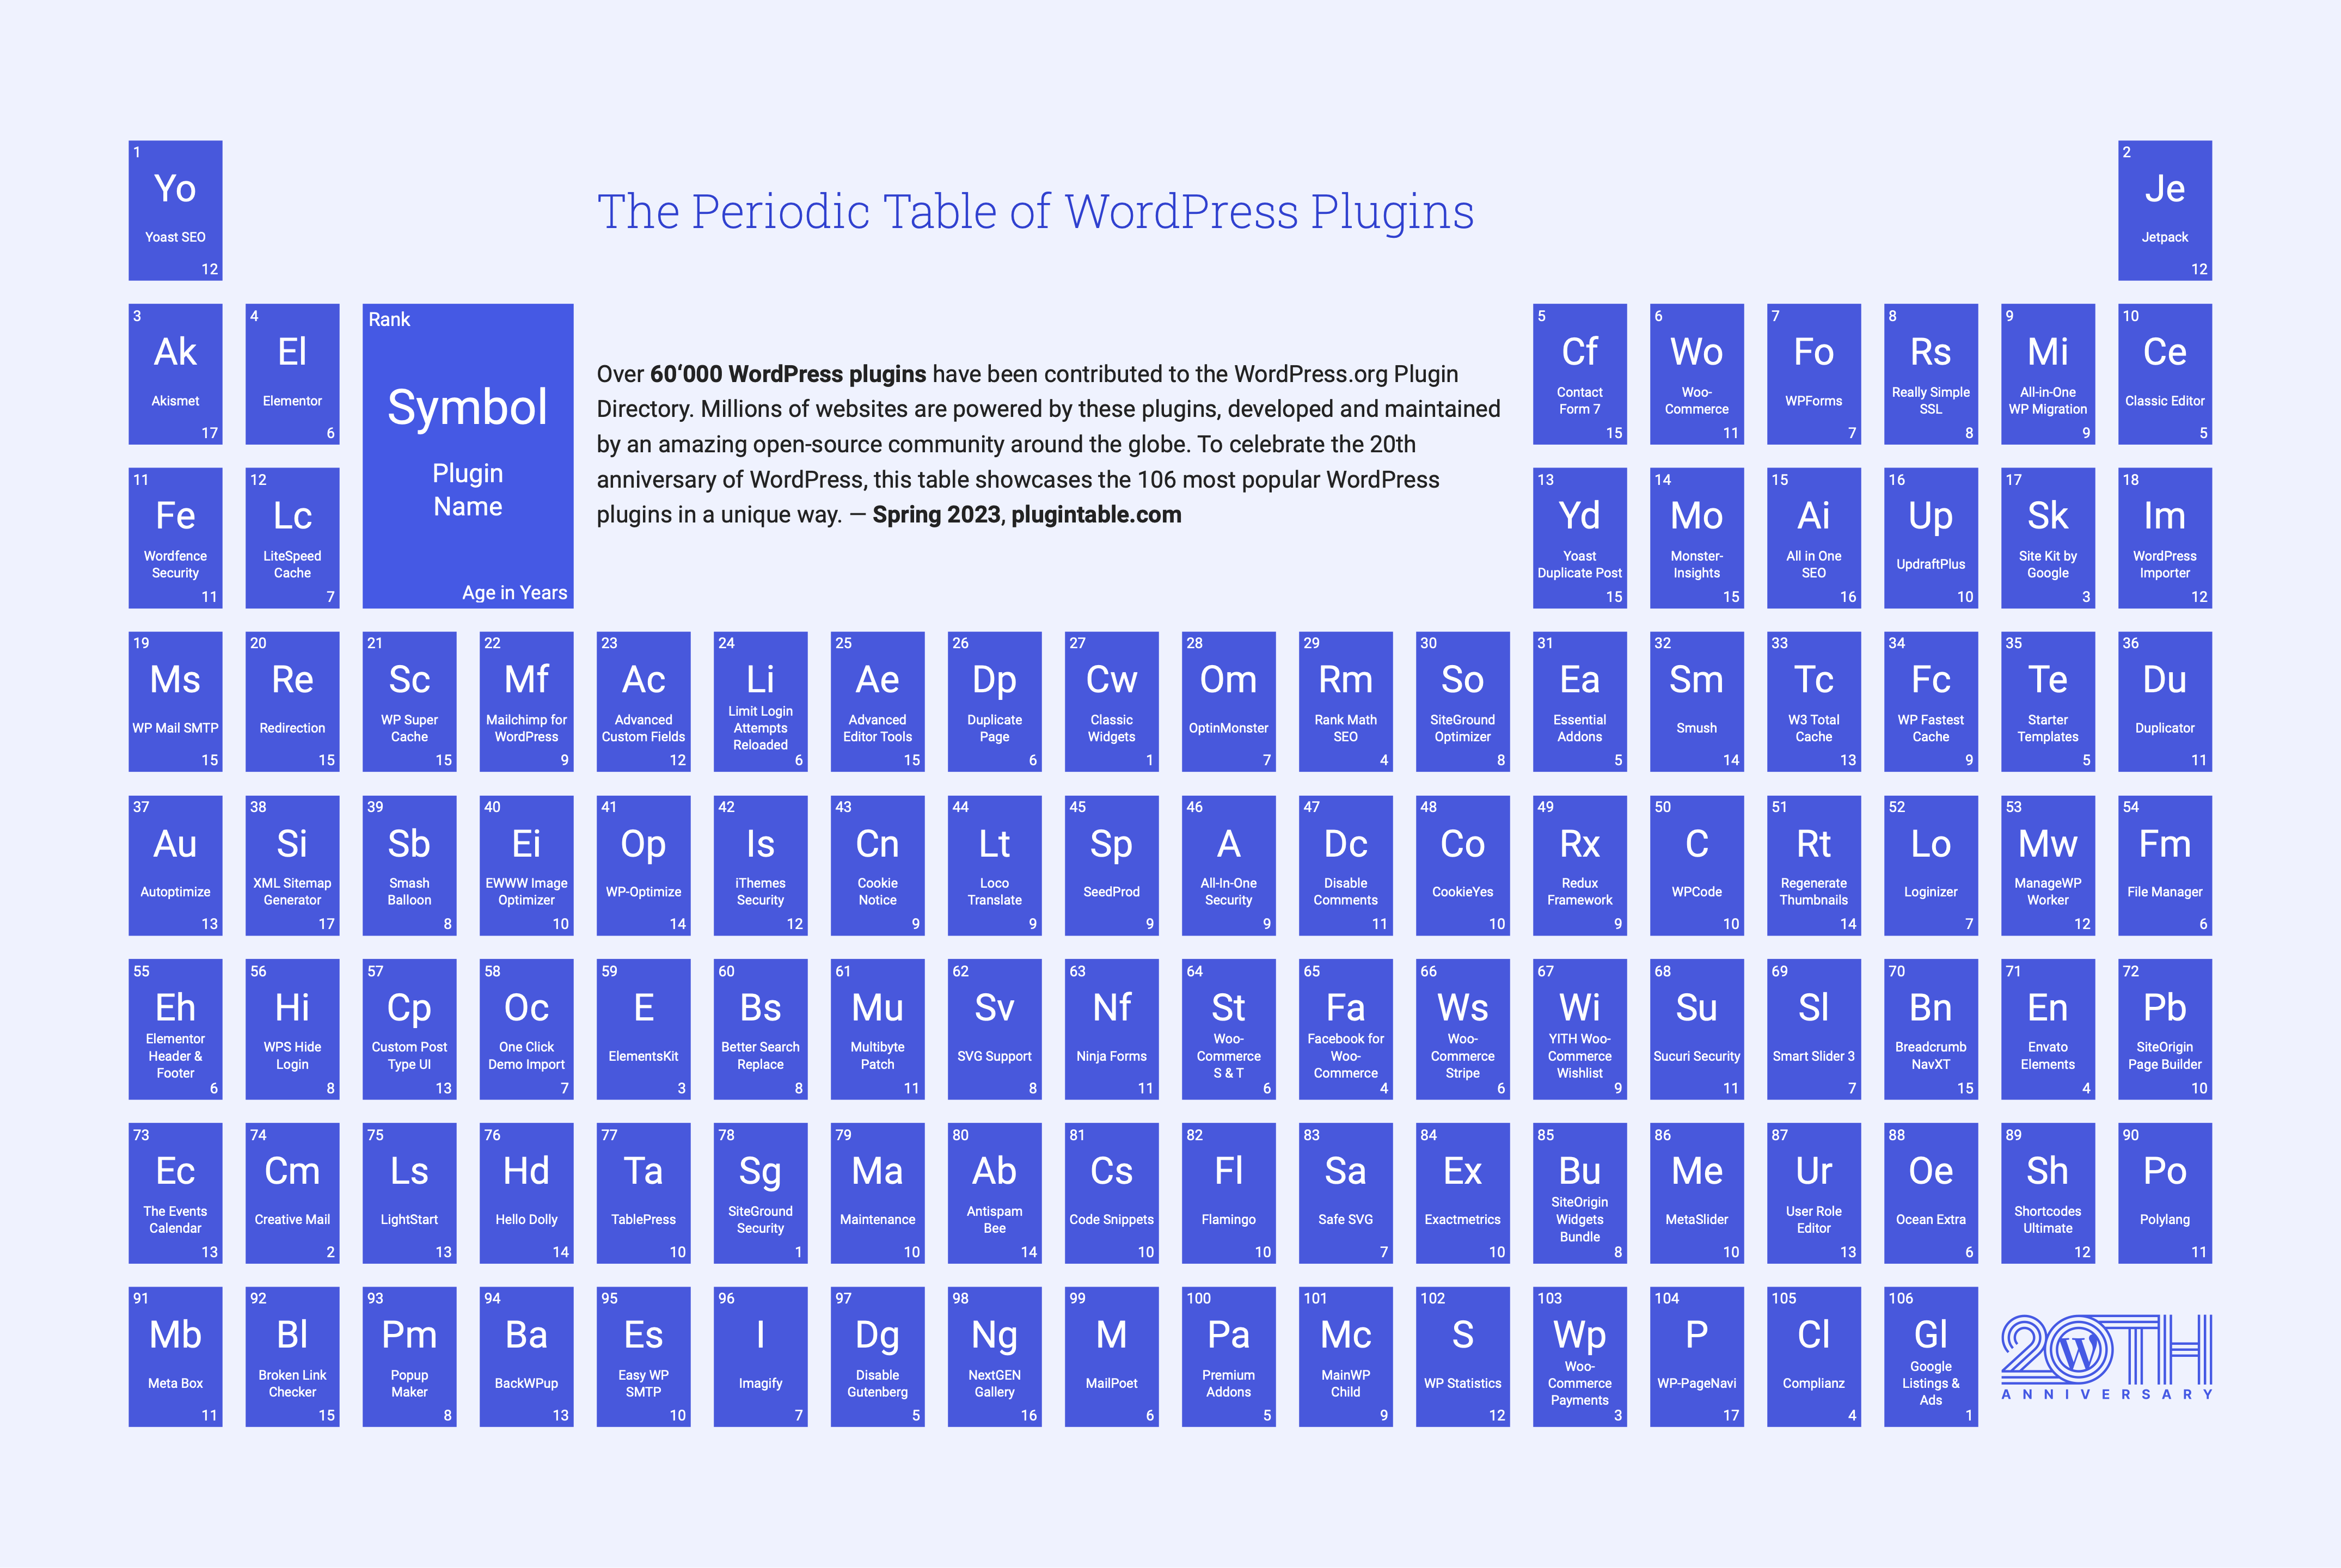 Introducing the Periodic Table of WordPress Plugins